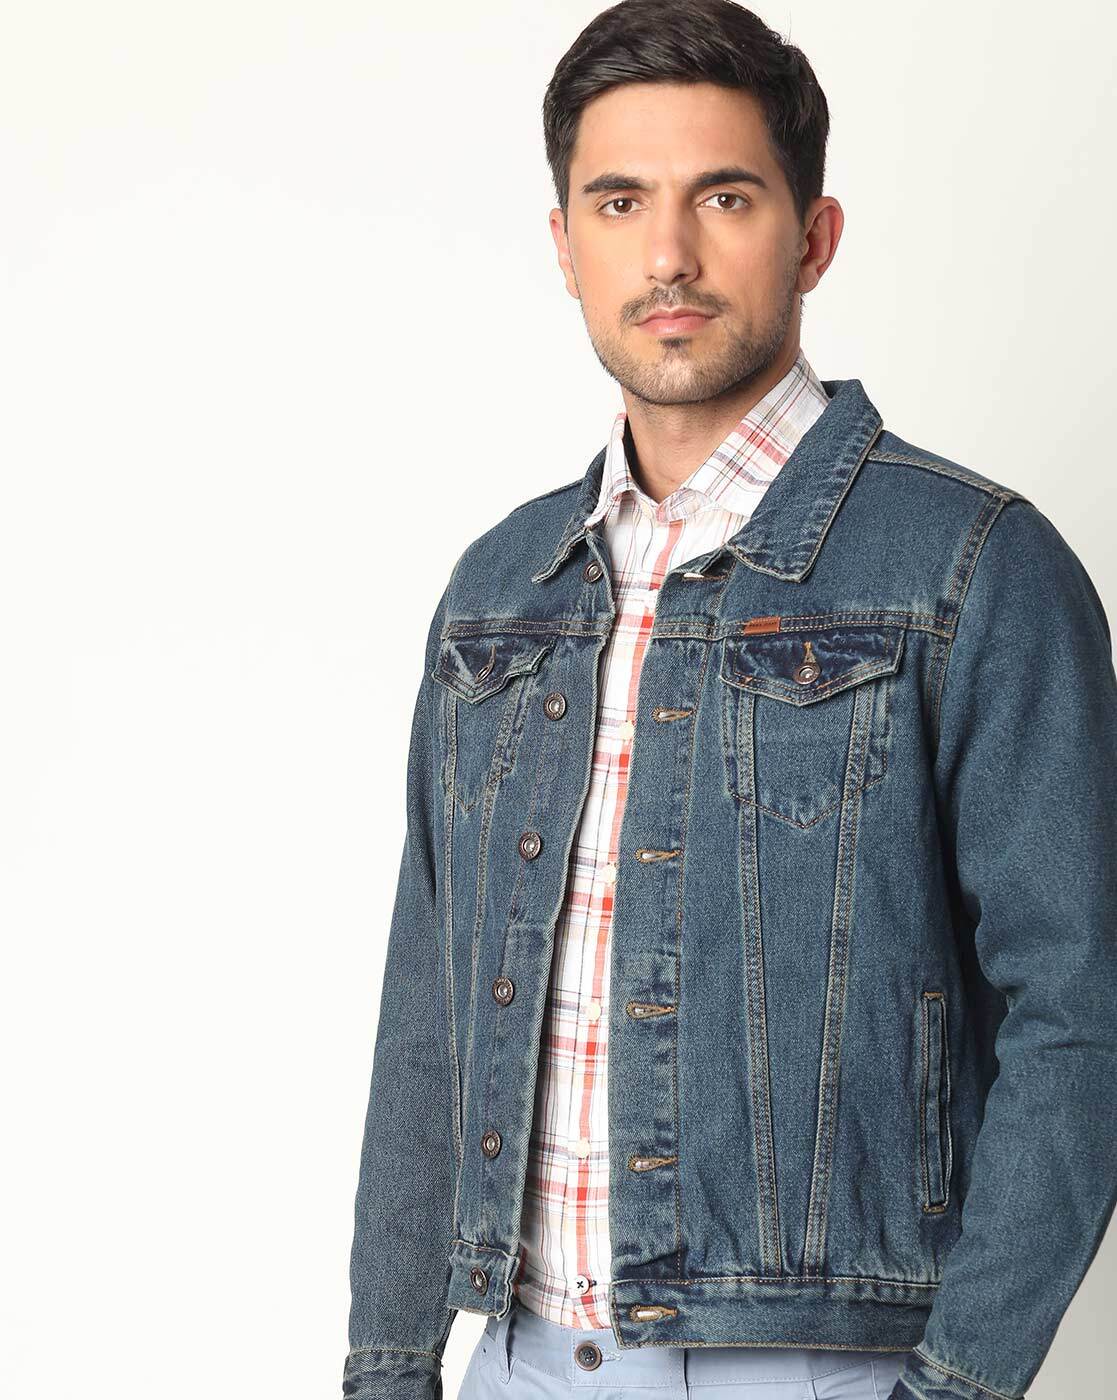 Buy Olive Jackets & Coats for Men by URBANO FASHION Online | Ajio.com